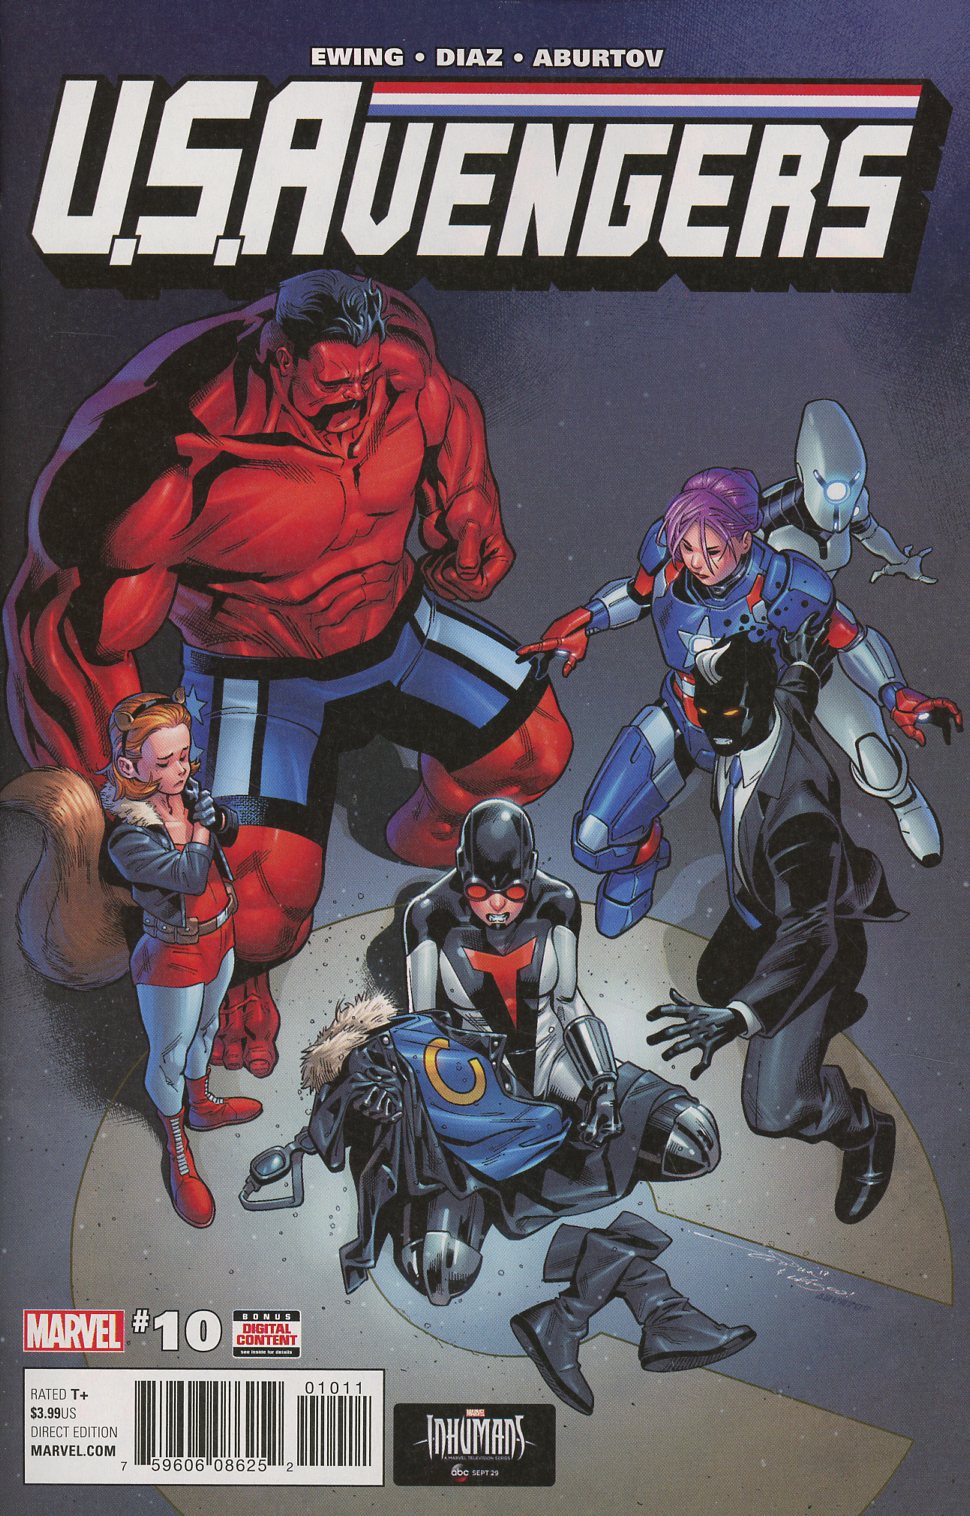 U.S.Avengers #10 (Secret Empire Epilogue)